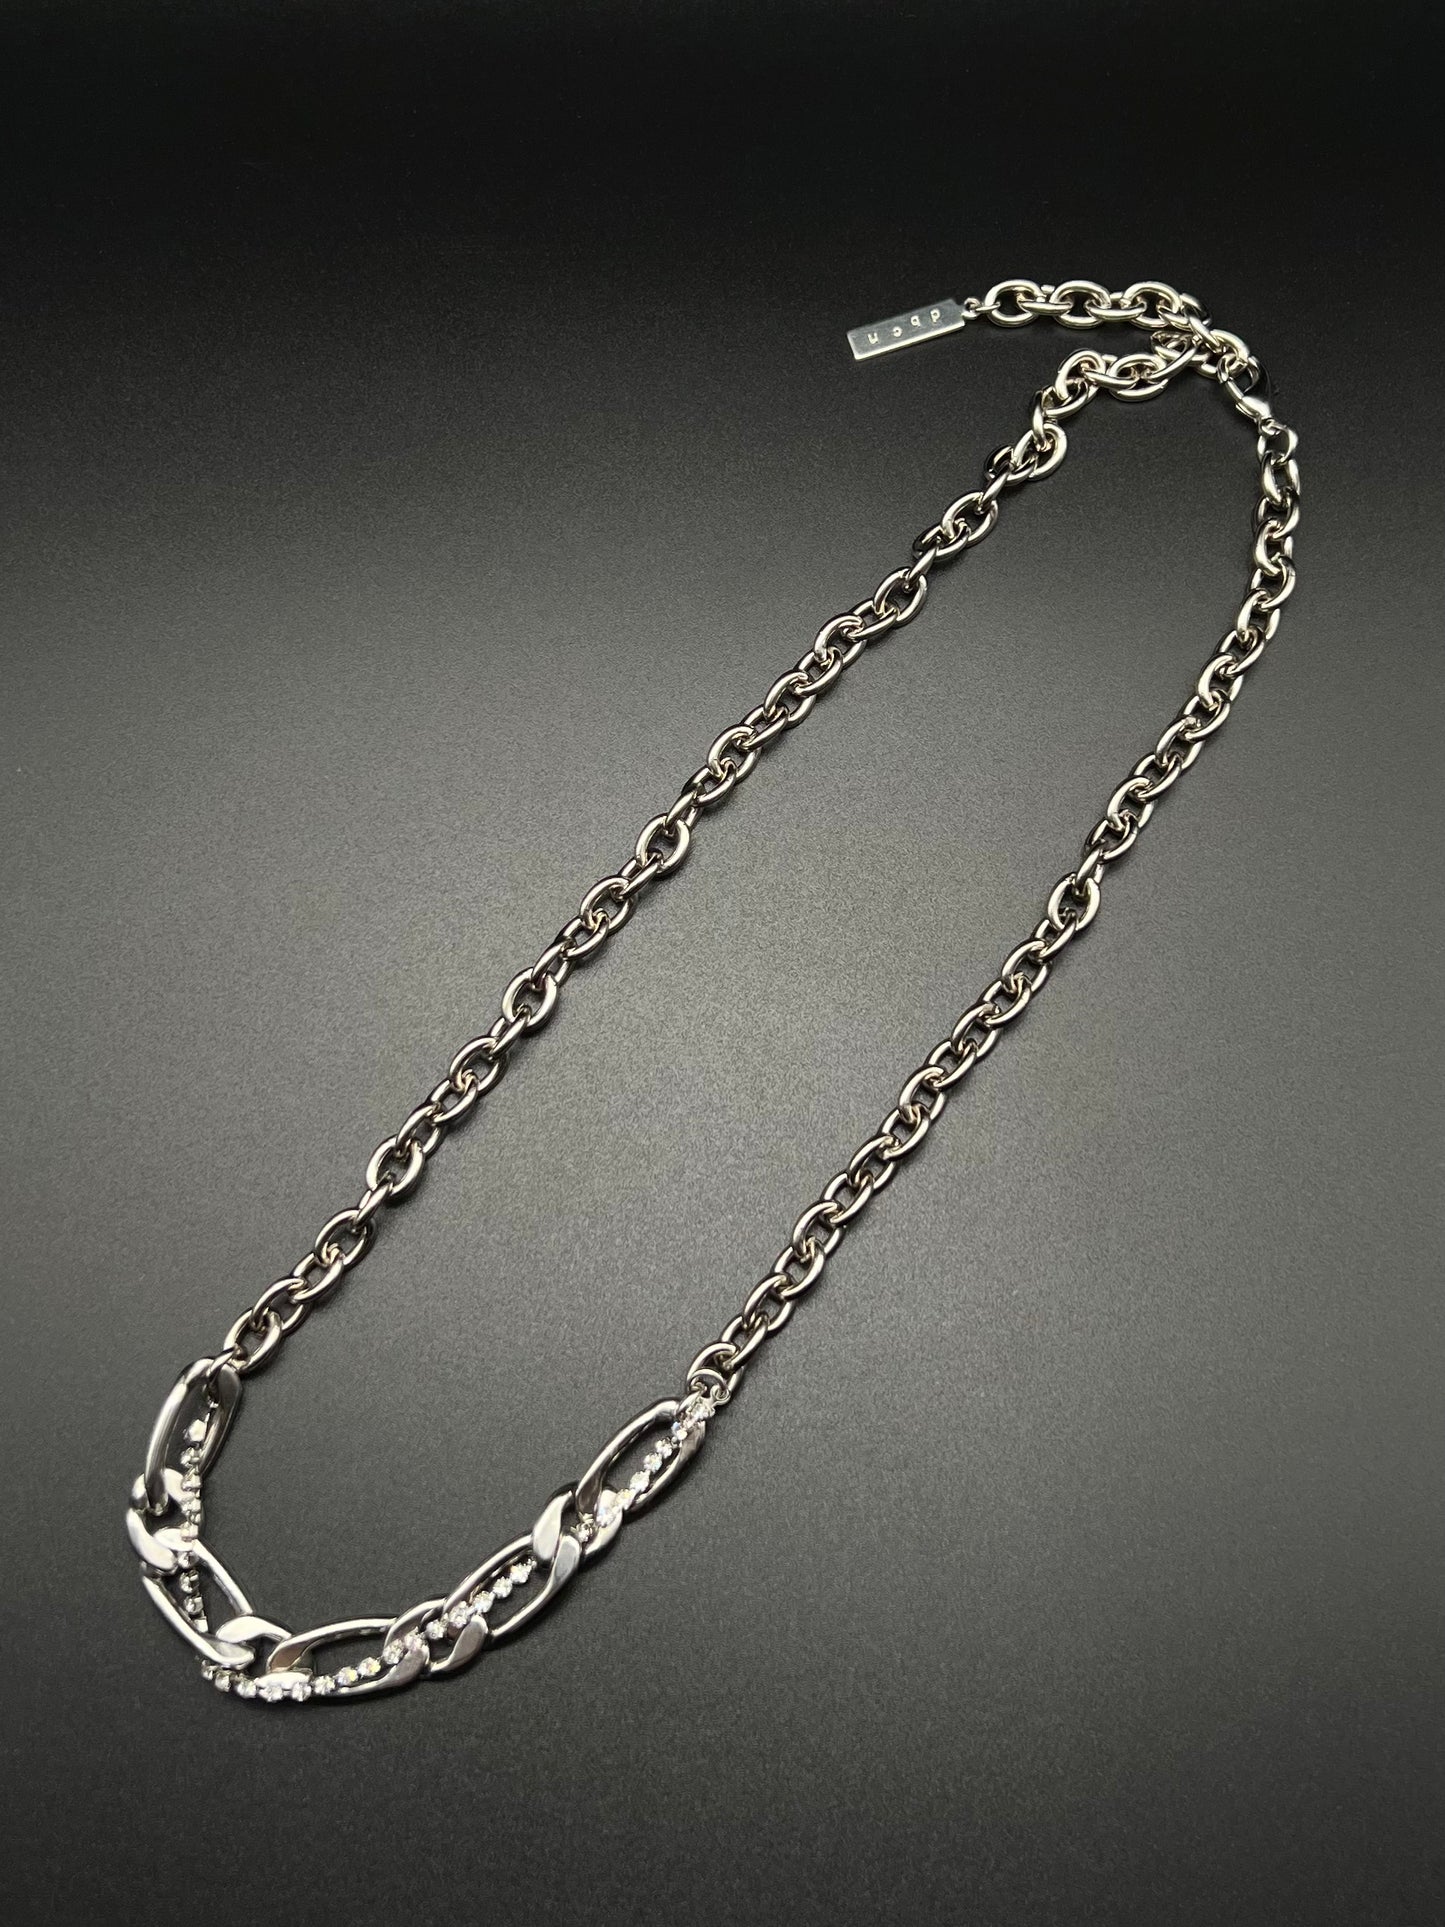 1111Chain bijou necklace - Silver